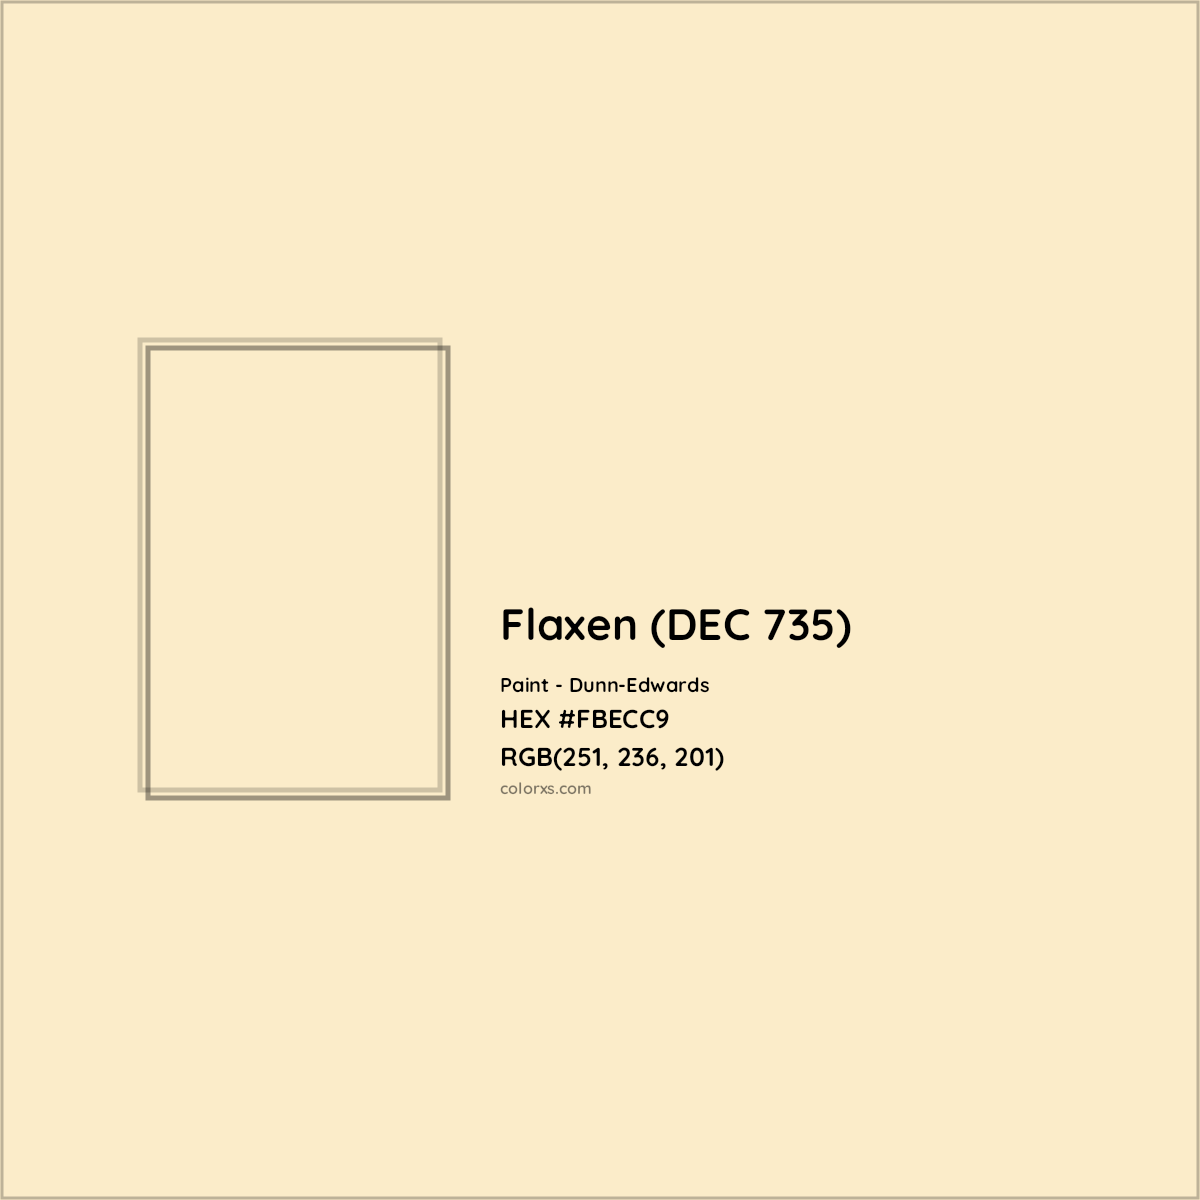 HEX #FBECC9 Flaxen (DEC 735) Paint Dunn-Edwards - Color Code